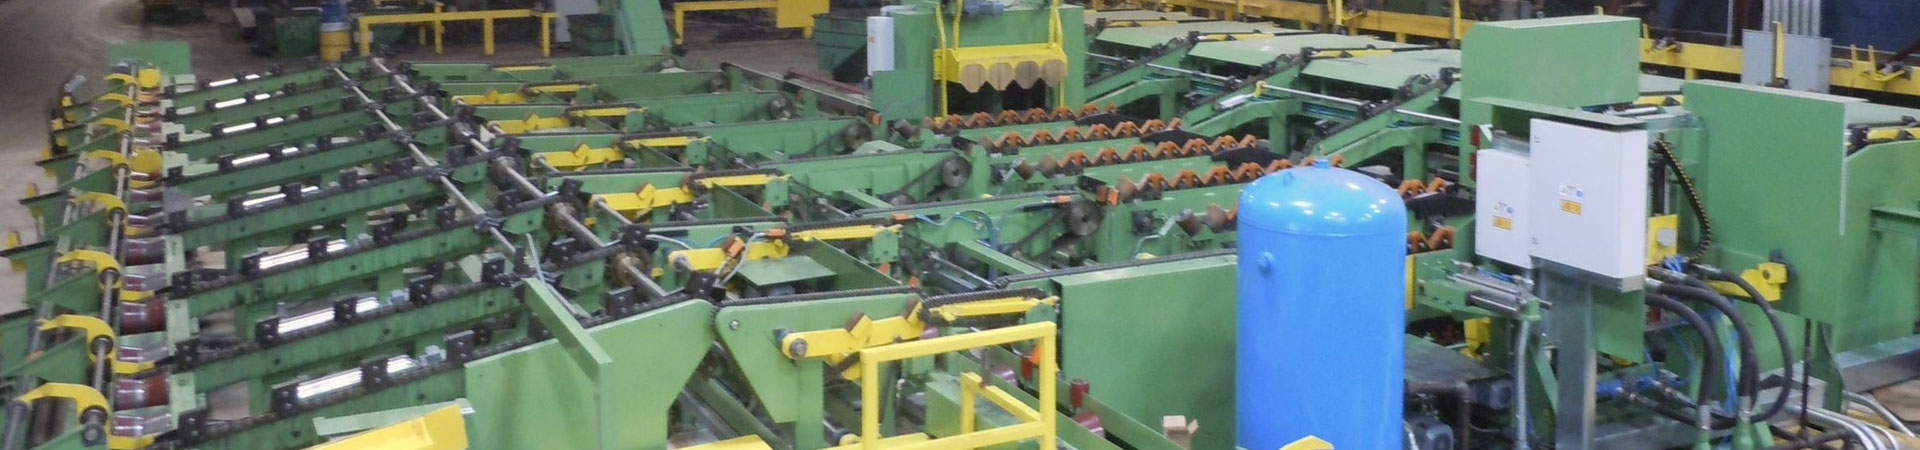 Machinery on factory floor